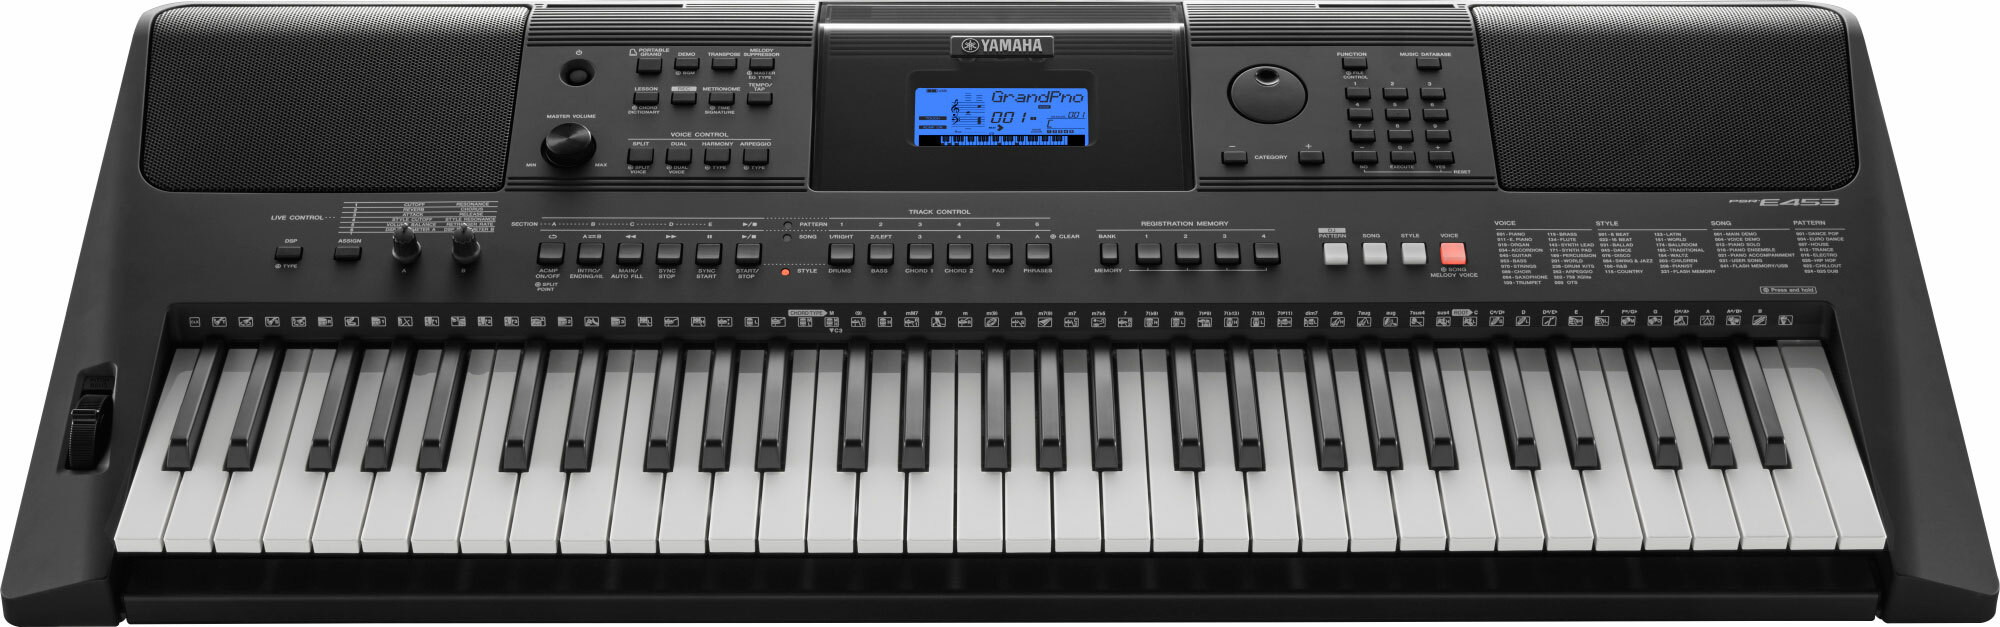 Yamaha Psr-e453 - Entertainer Keyboard - Main picture